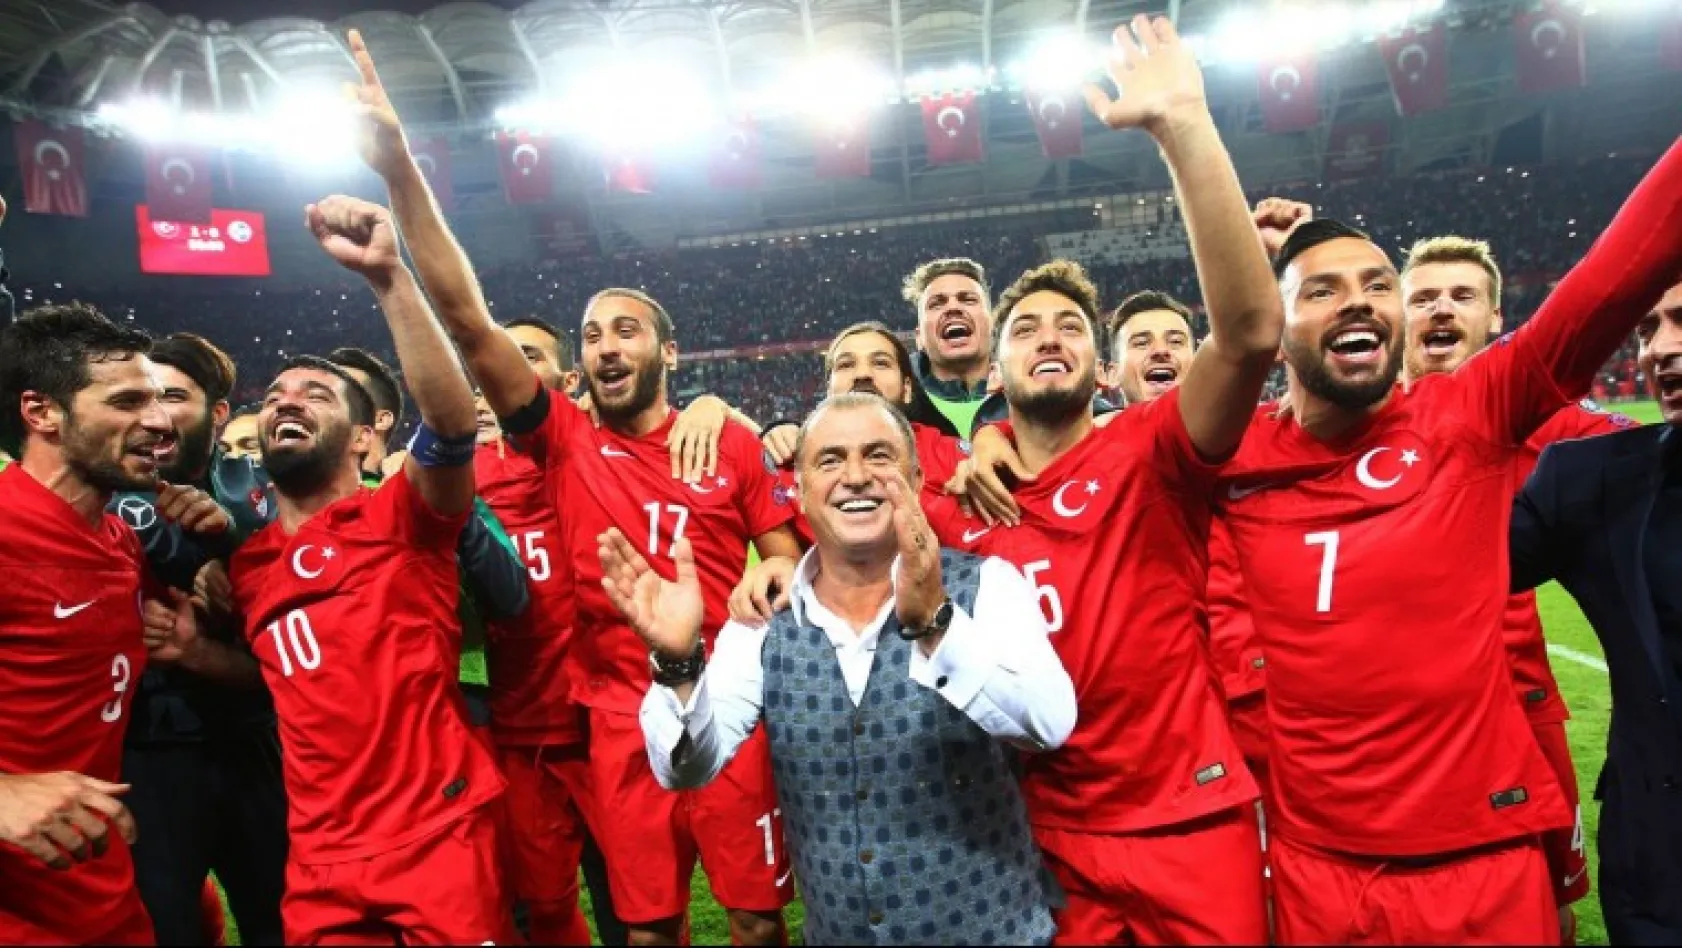 Milli maç Ahmet Aytar'da izlenir